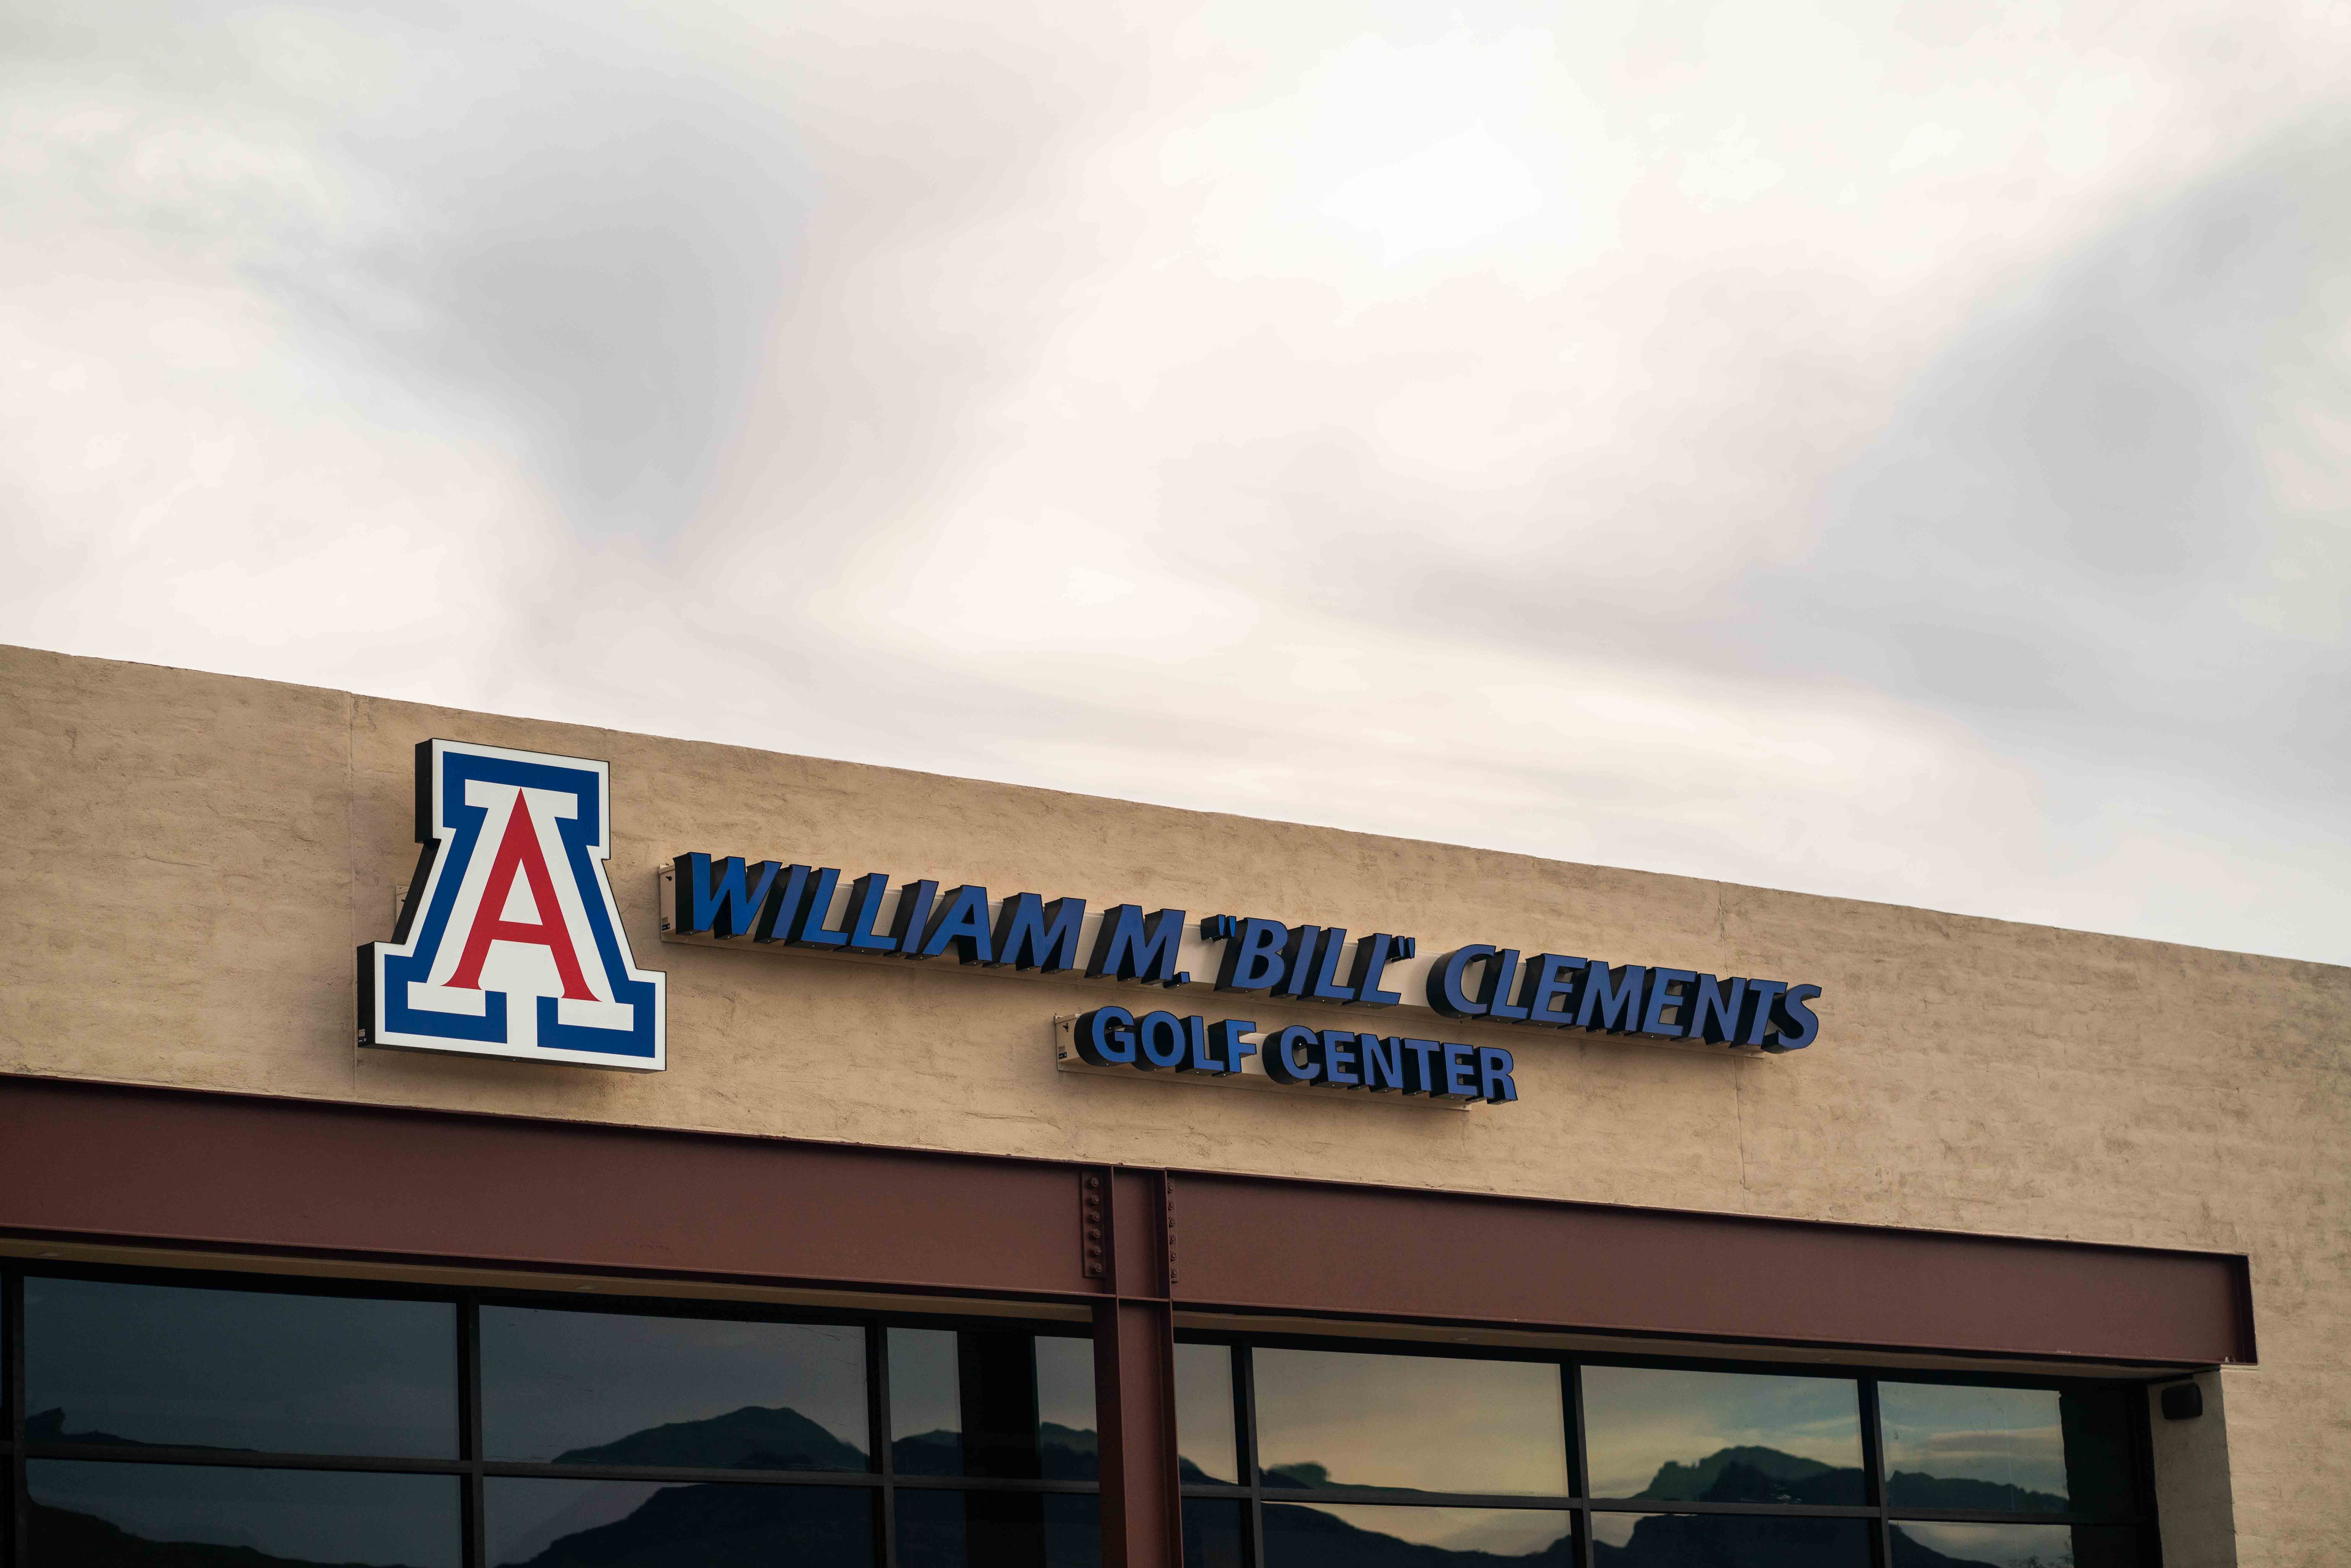 University of Arizona opens clements golf center